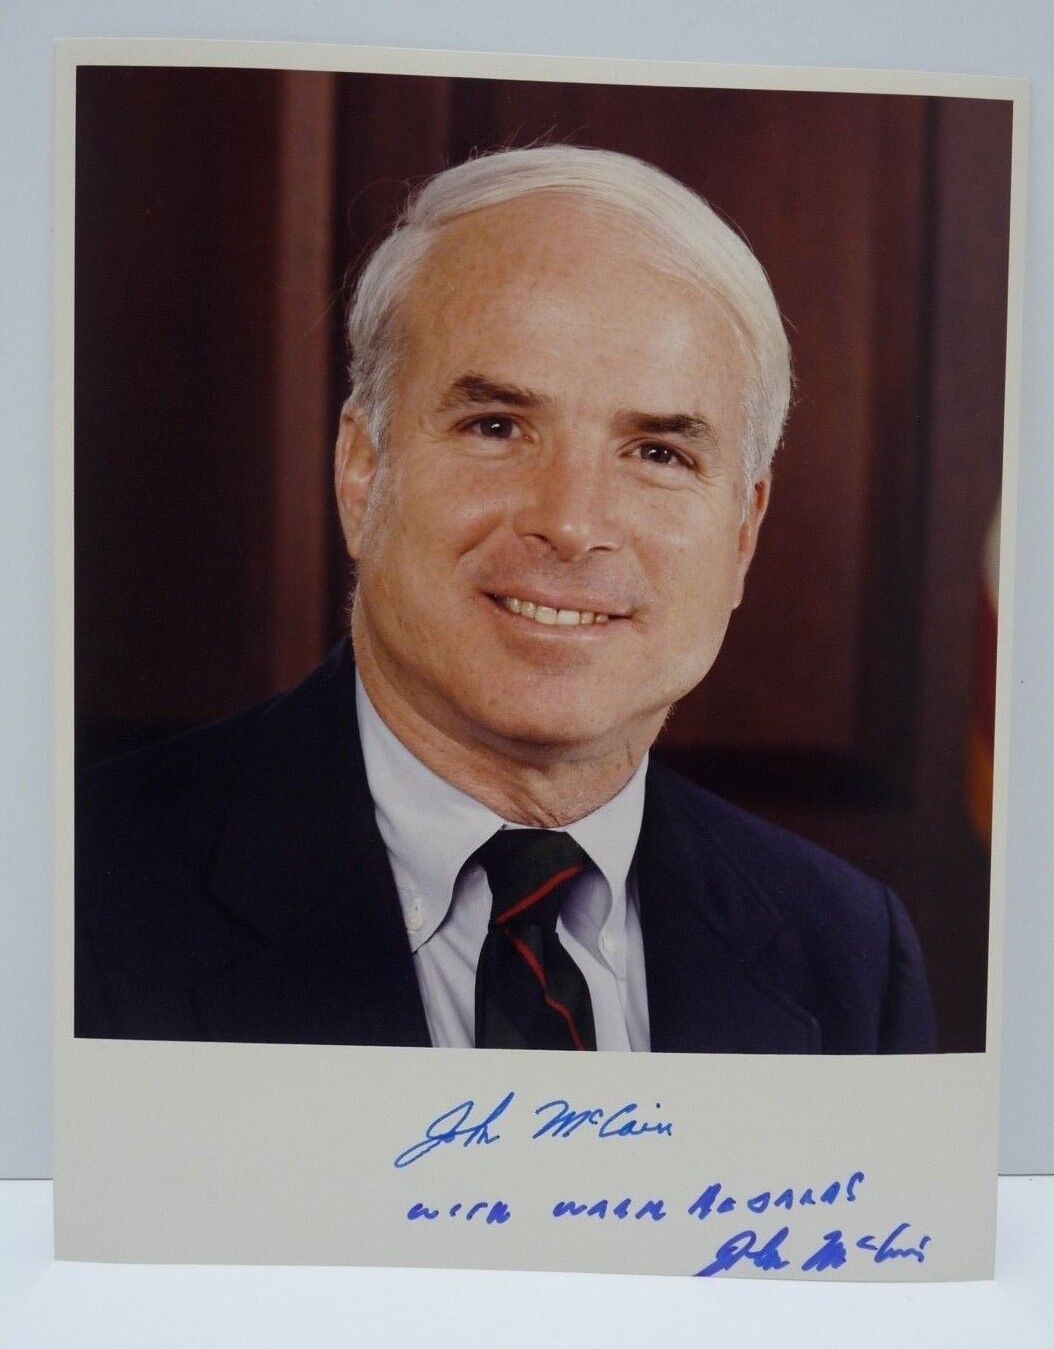 John McCain Autographed Signed Senator President 8x10 Photo Poster painting Beckett Certified